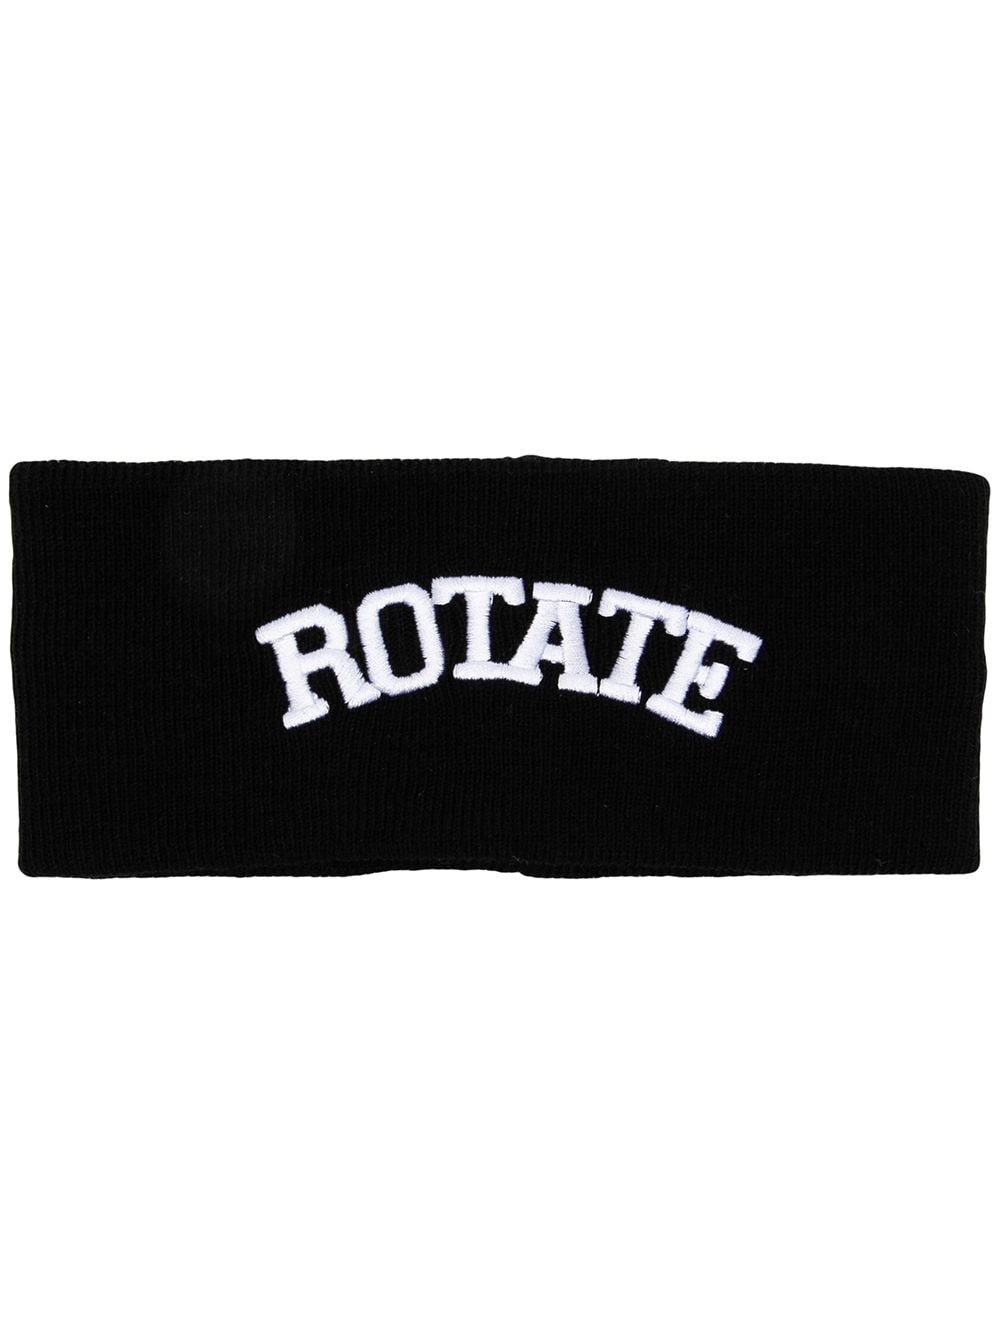 фото Rotate повязка на голову с вышитым логотипом